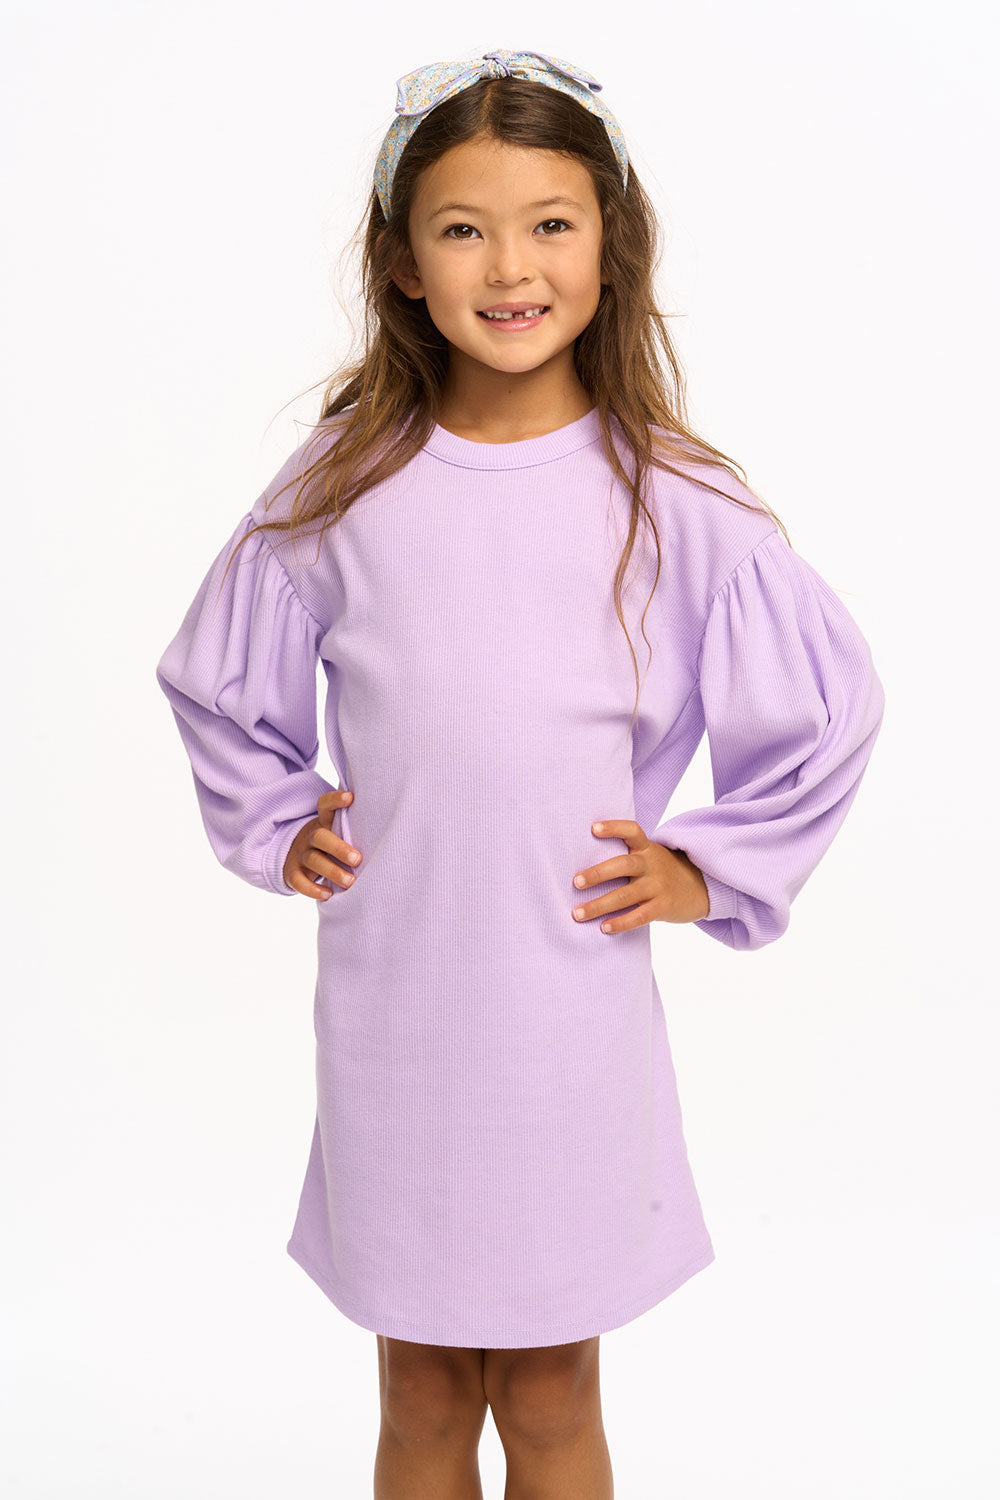 Chaser Kids Riley L/S Dress in Digital Lavendar - FINAL SALE